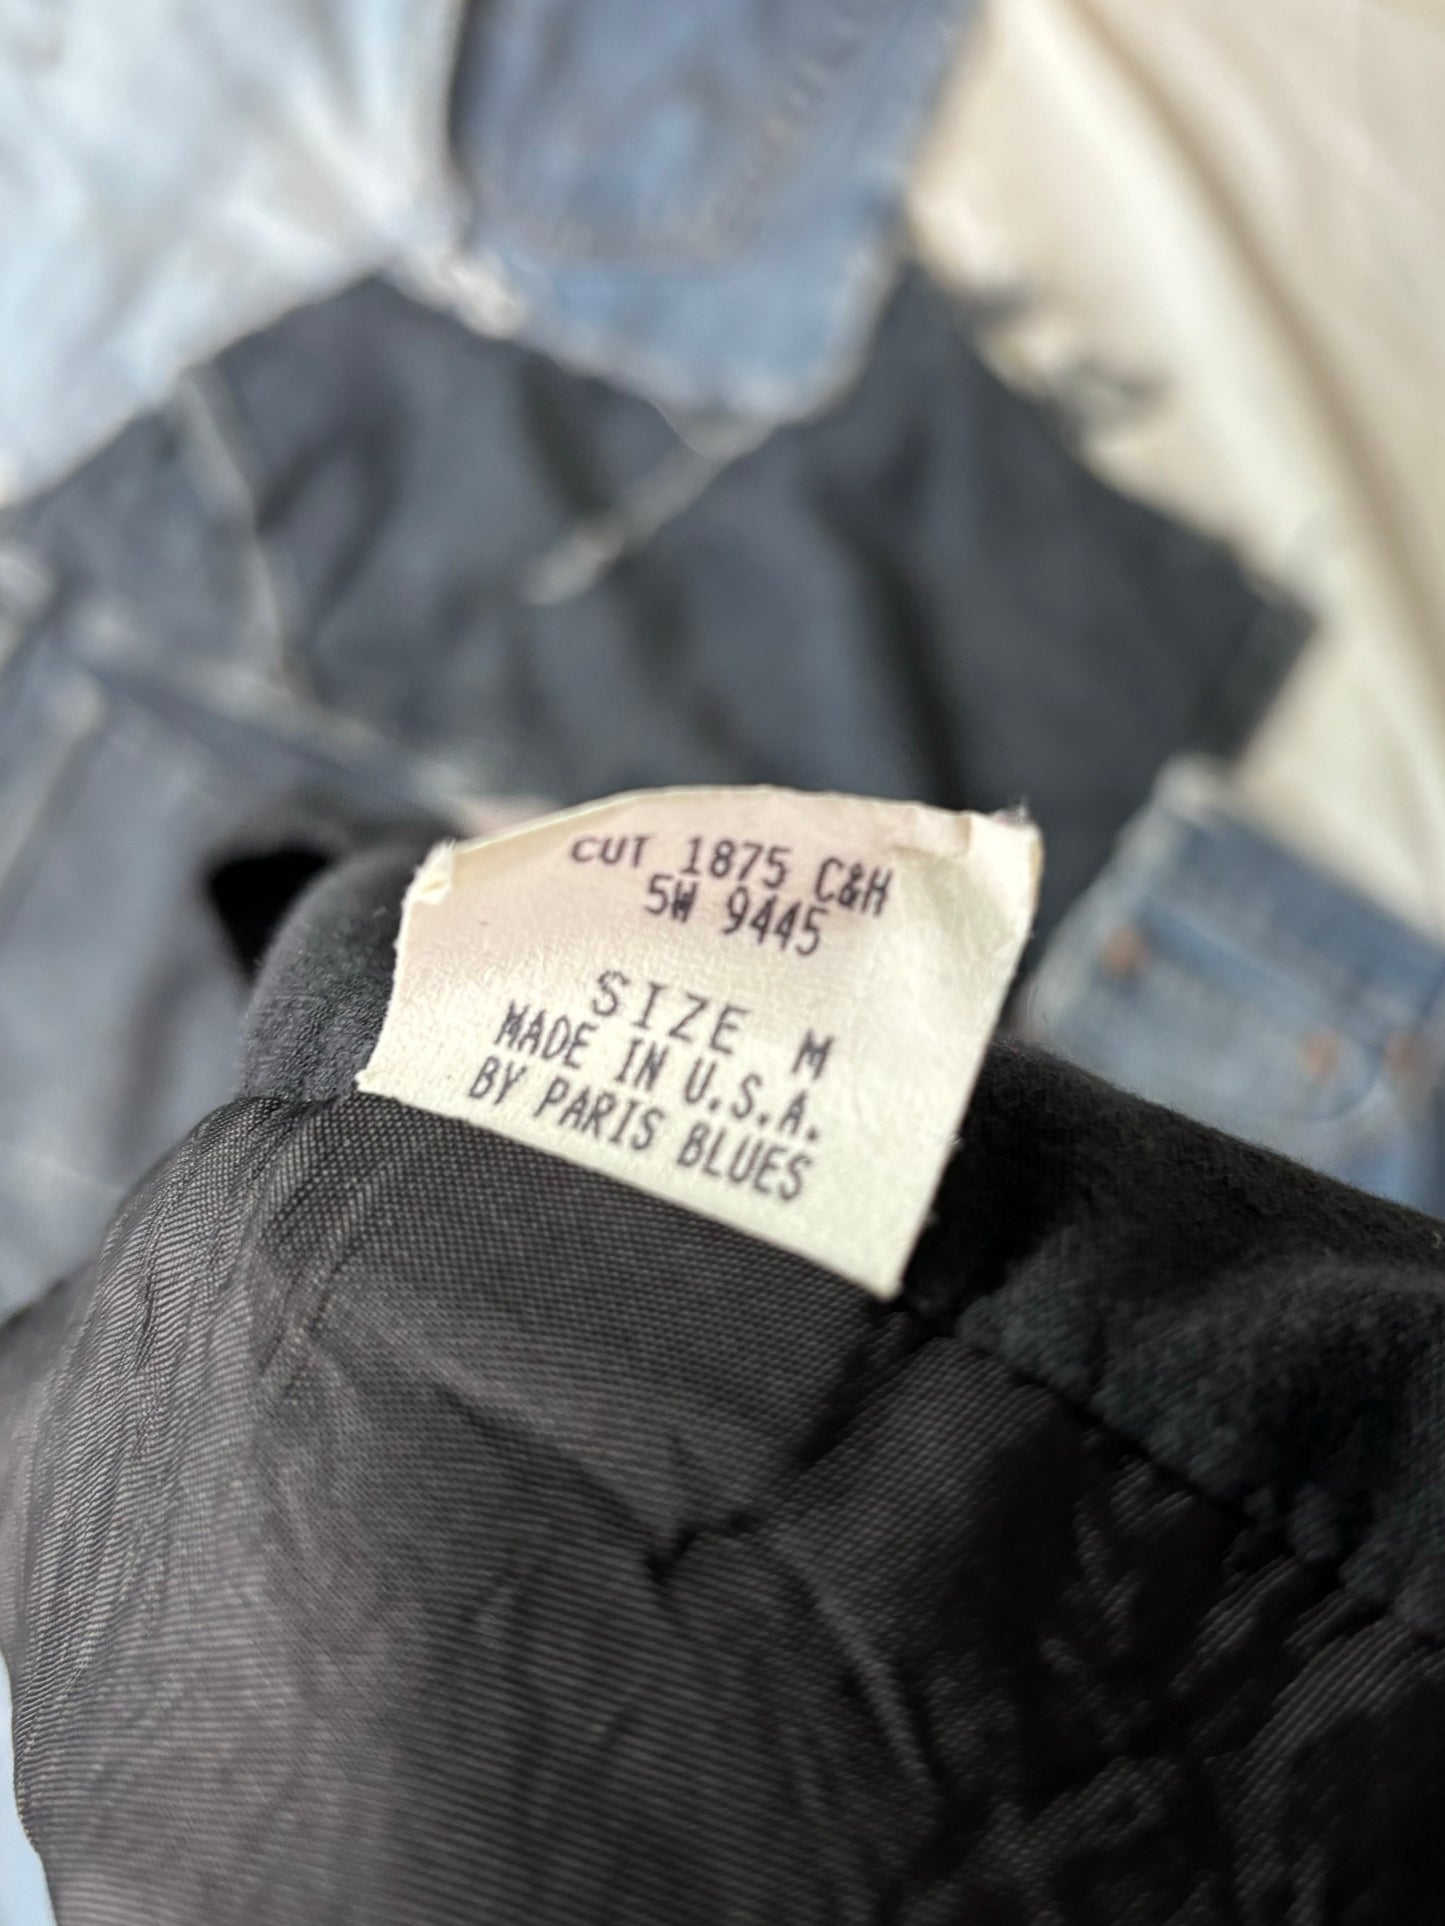 Vintage Black Velvet Vest